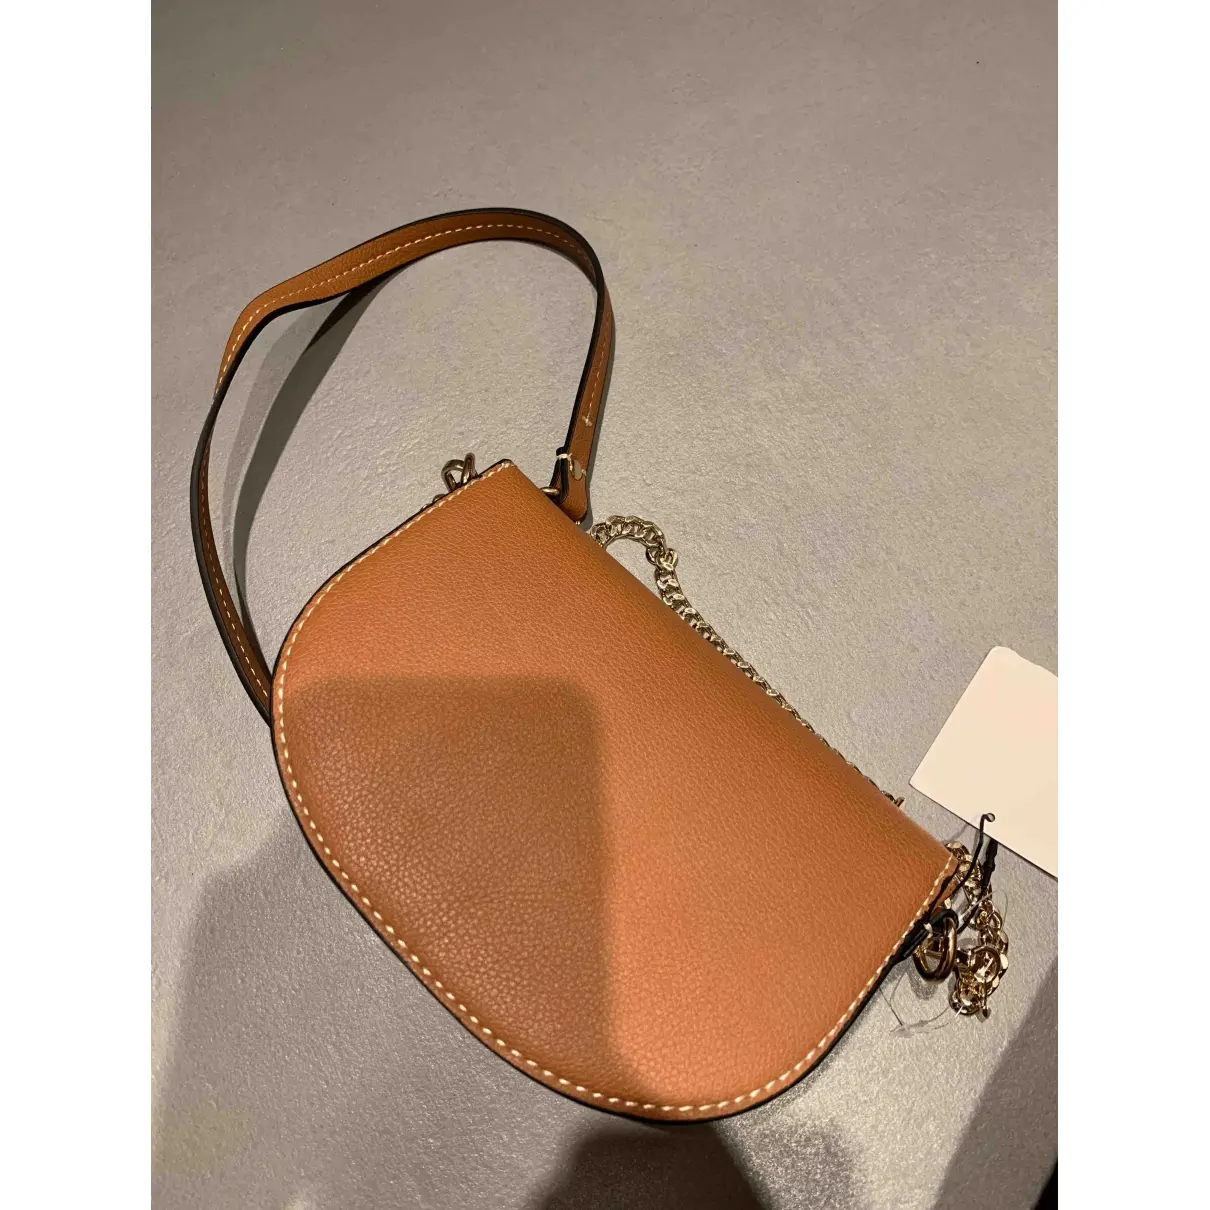 Zara Crossbody bag for sale